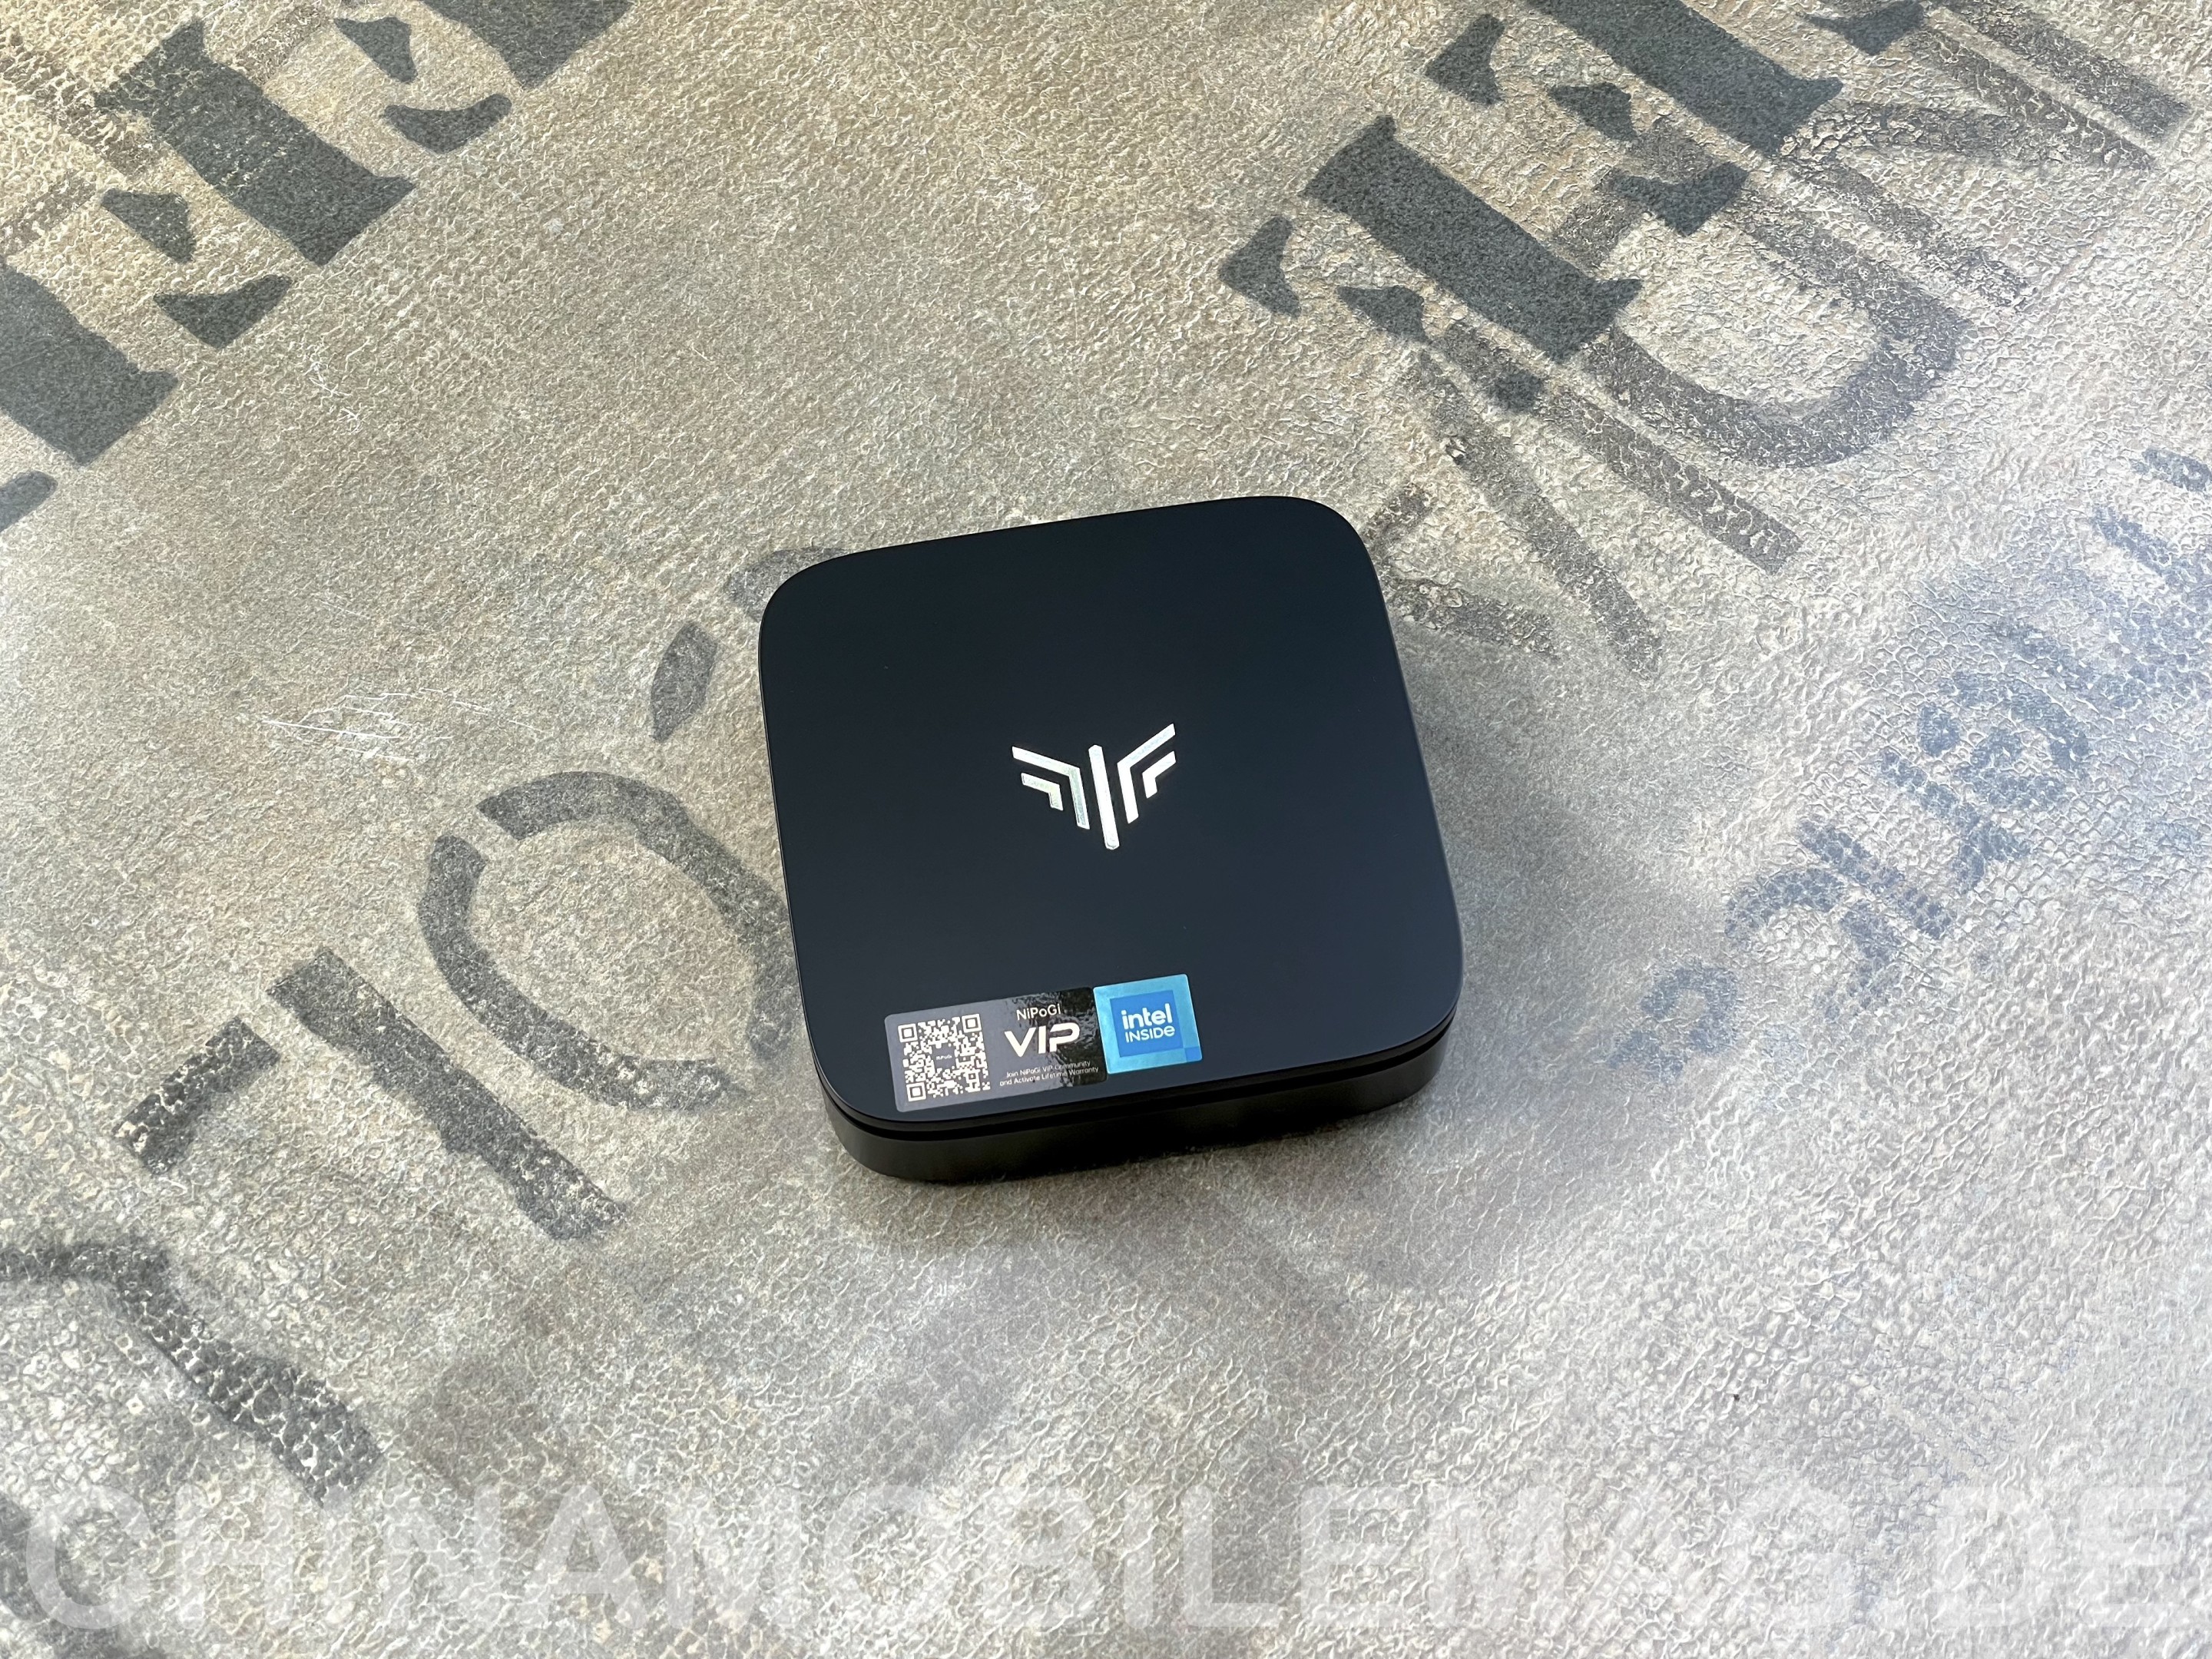 NiPoGi AK1 Plus Mini PC im Test: 16GB + 1TB für 200€